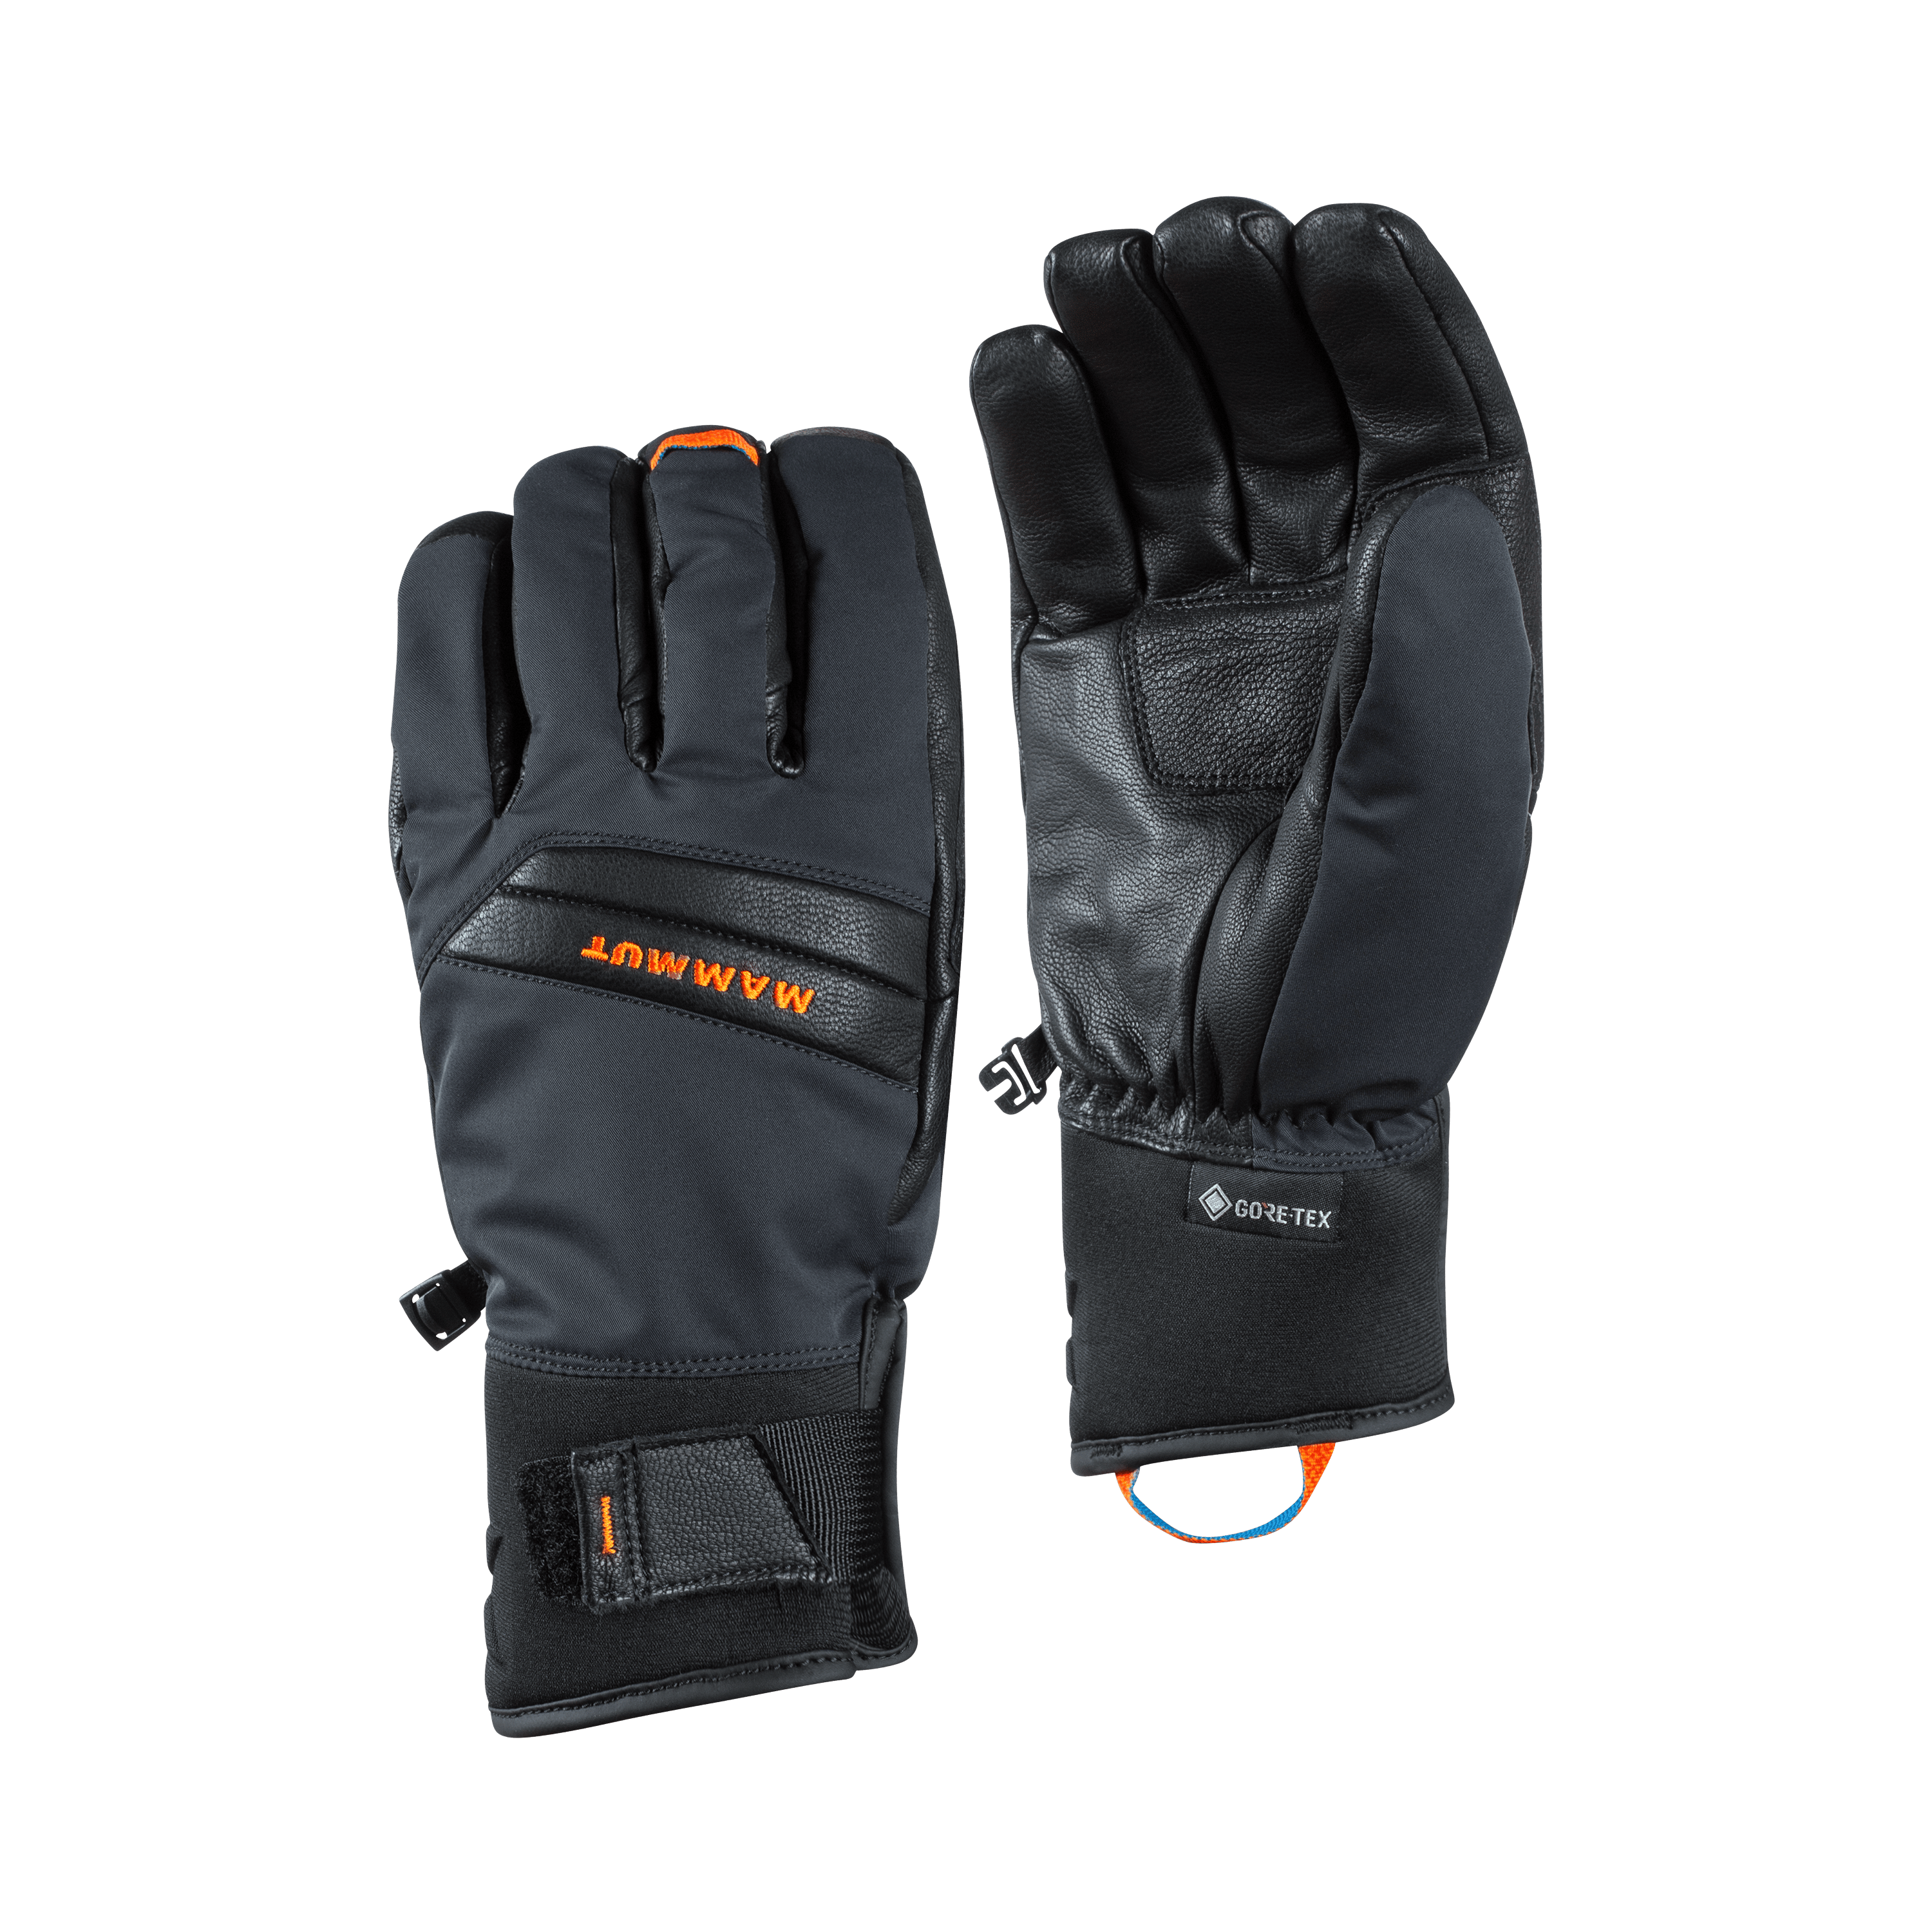 Nordwand Pro Glove